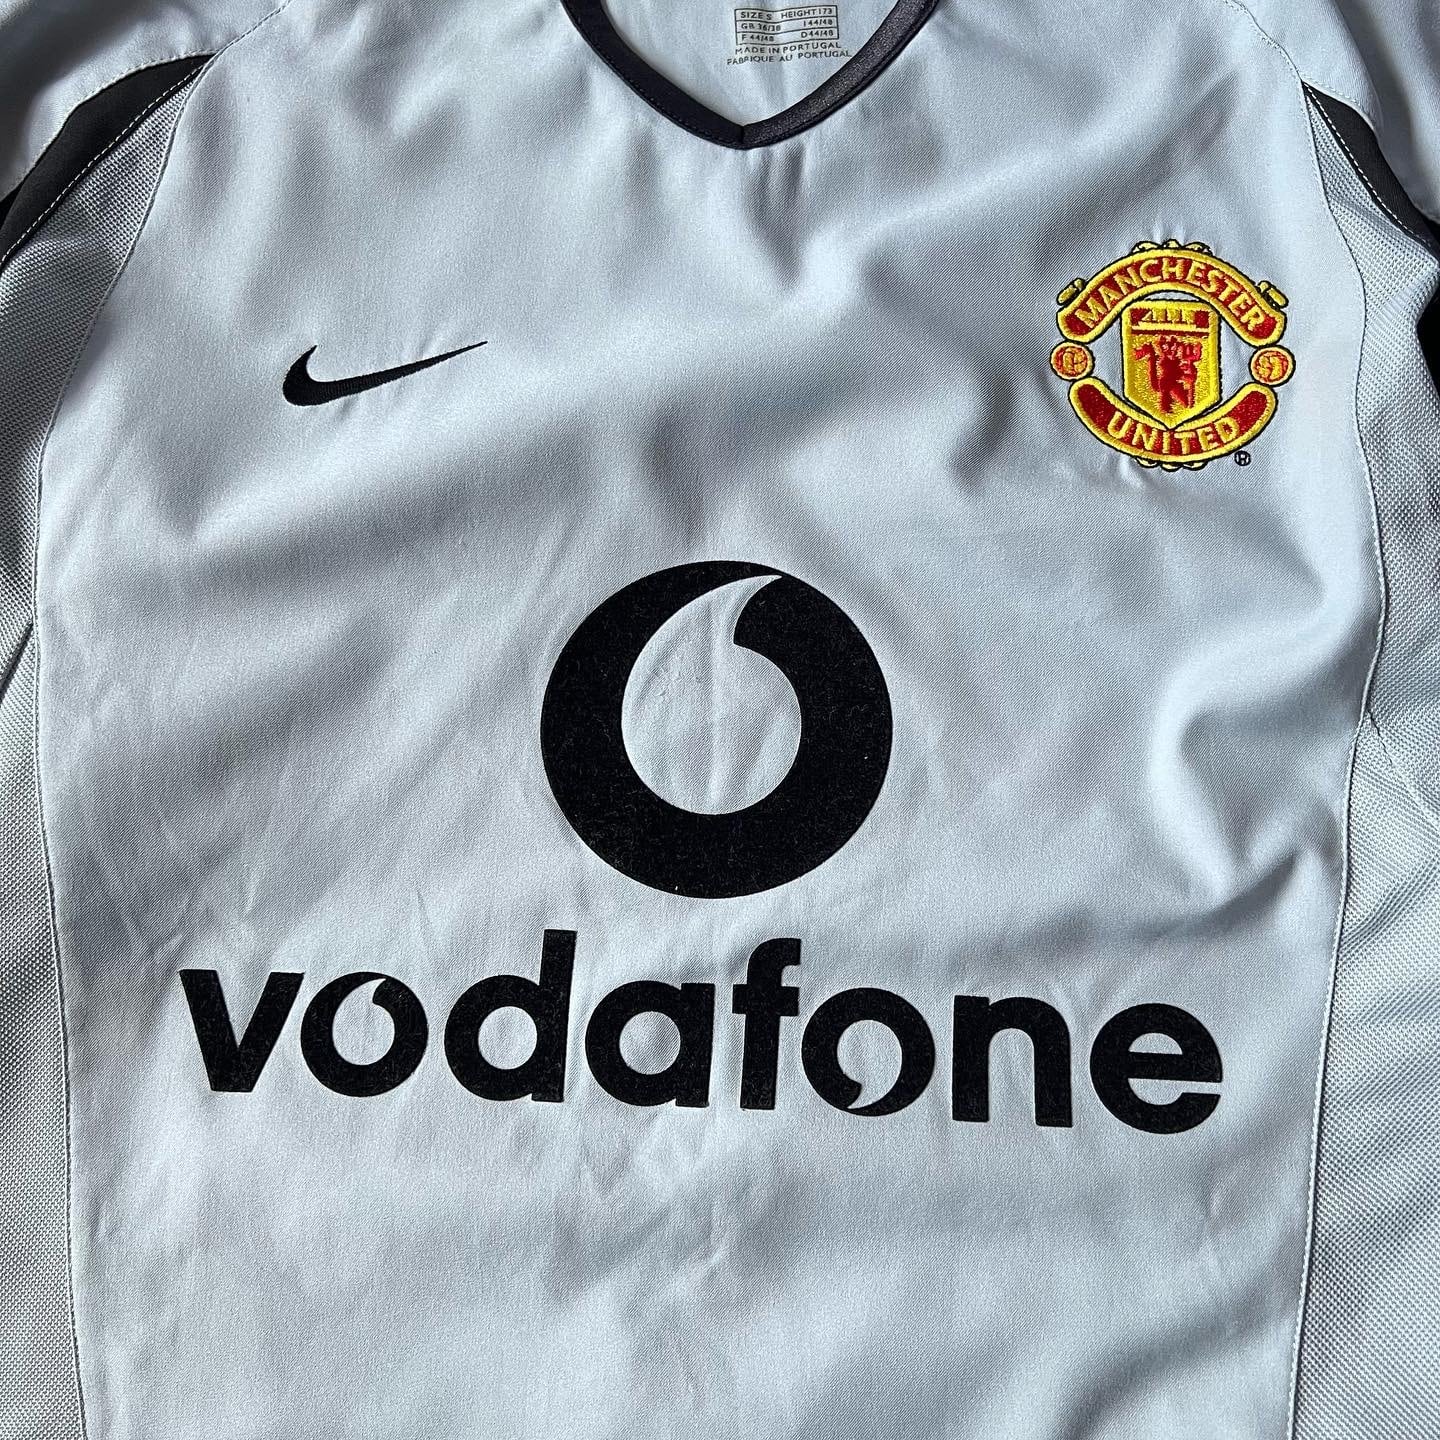 02s〜04s “nike × vodafone” Manchester united soccer game shirt 